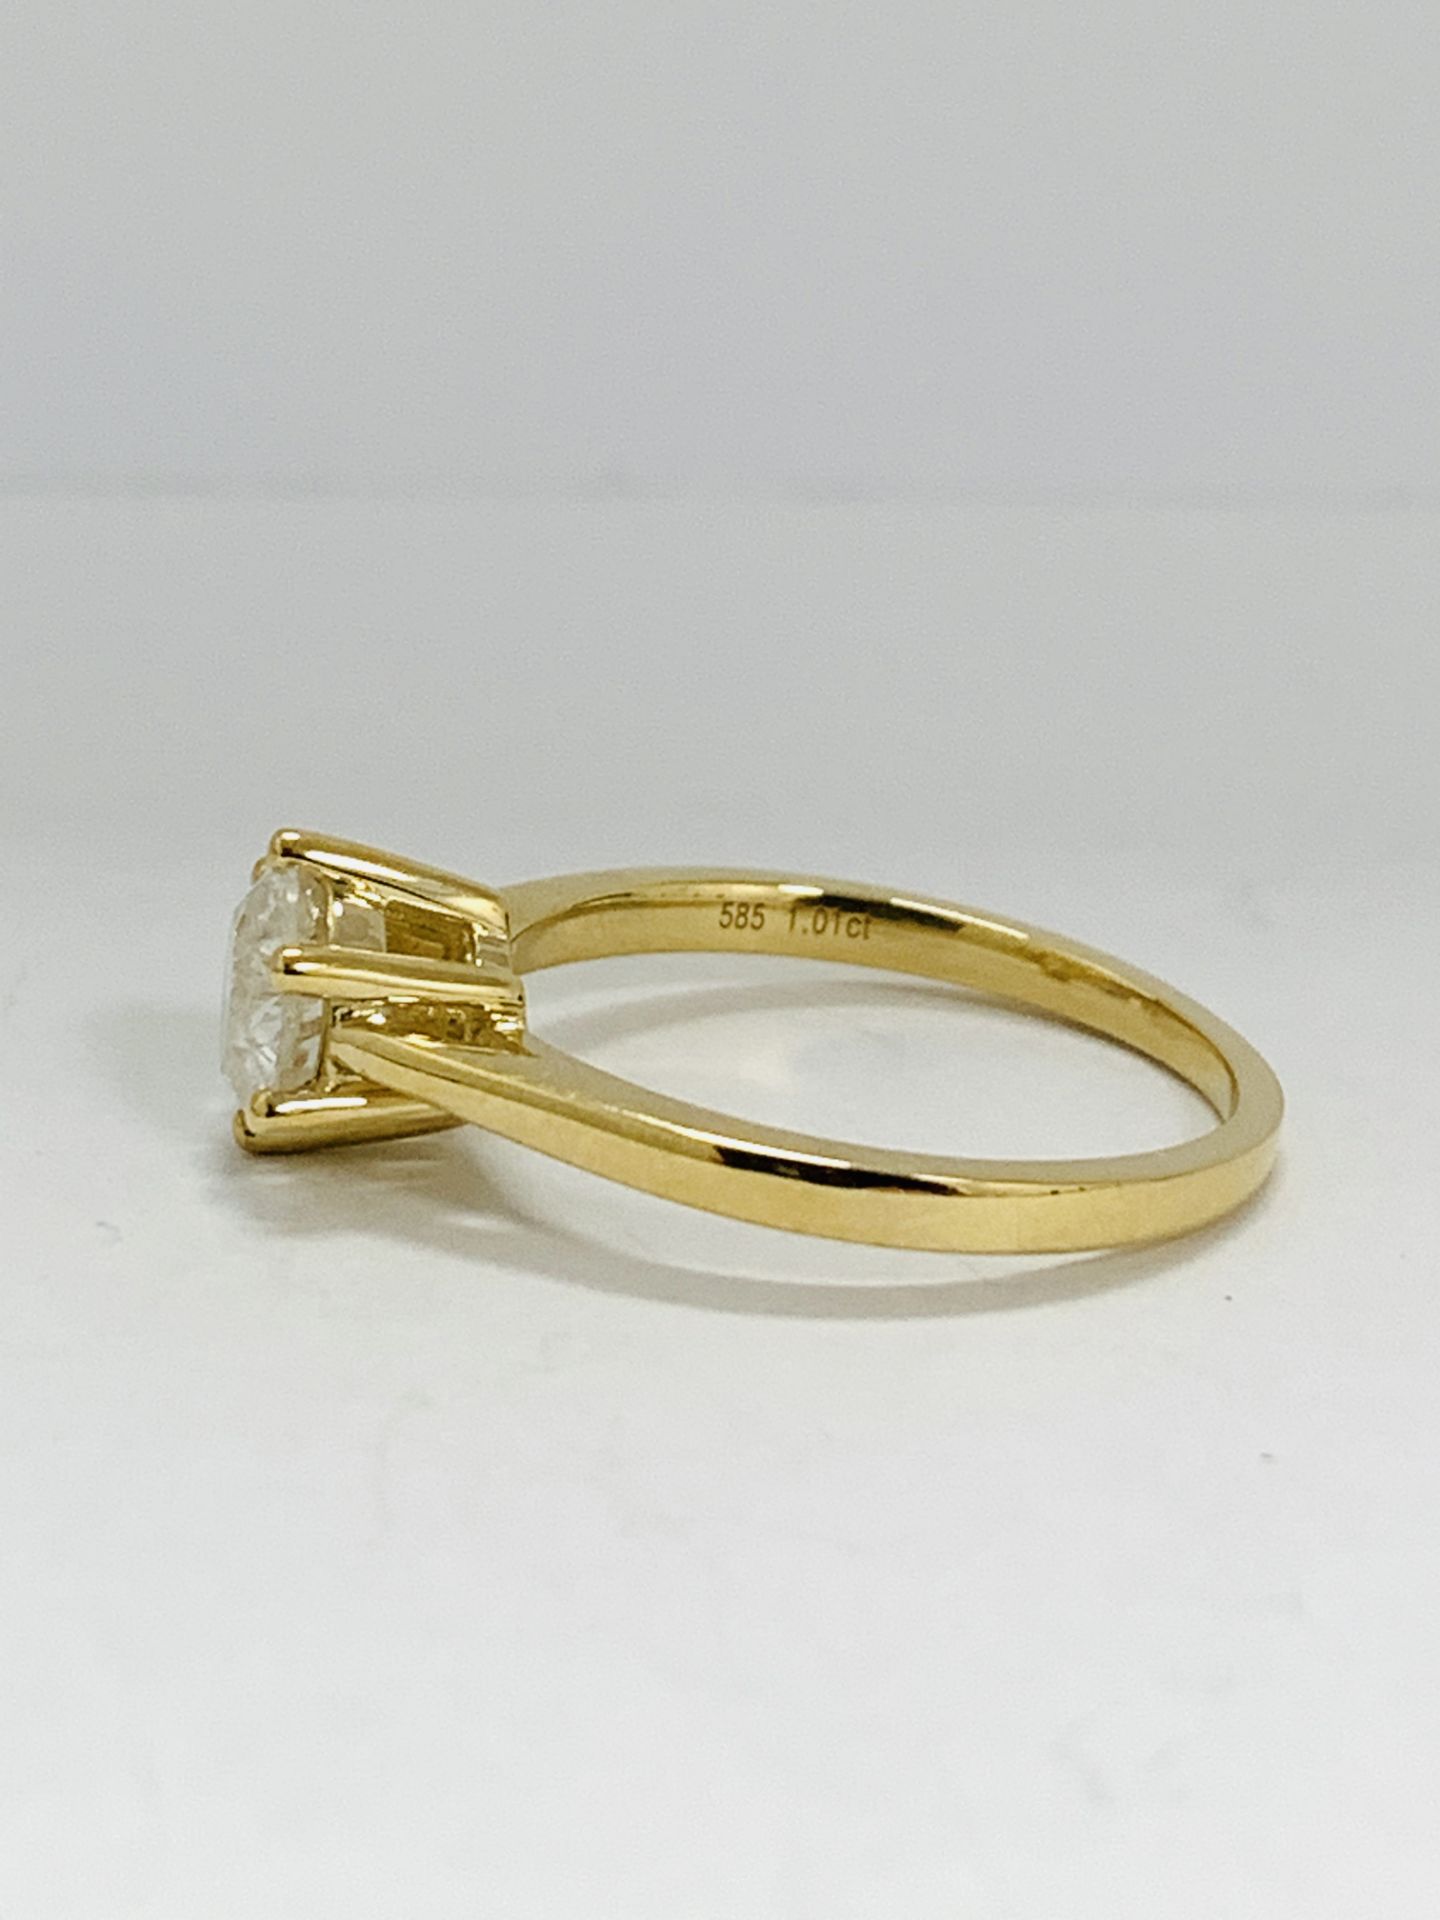 14K Yellow Gold Ring - Image 3 of 10